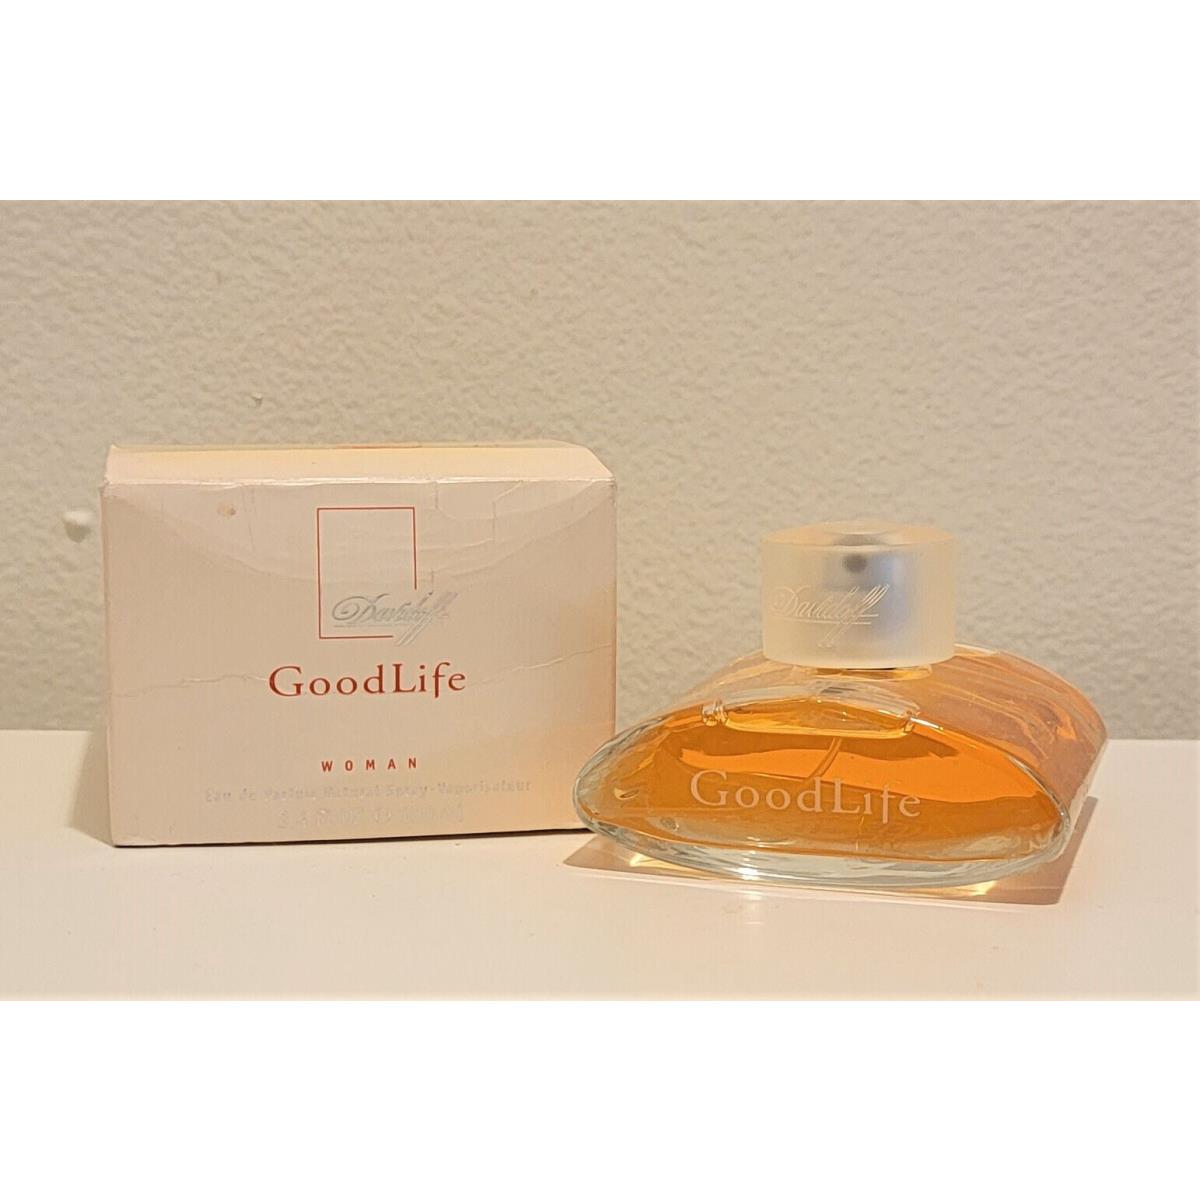 Goodlife by Davidoff 3.4 oz / 100 ml Edp Spy Perfume For Women Femme Vintage